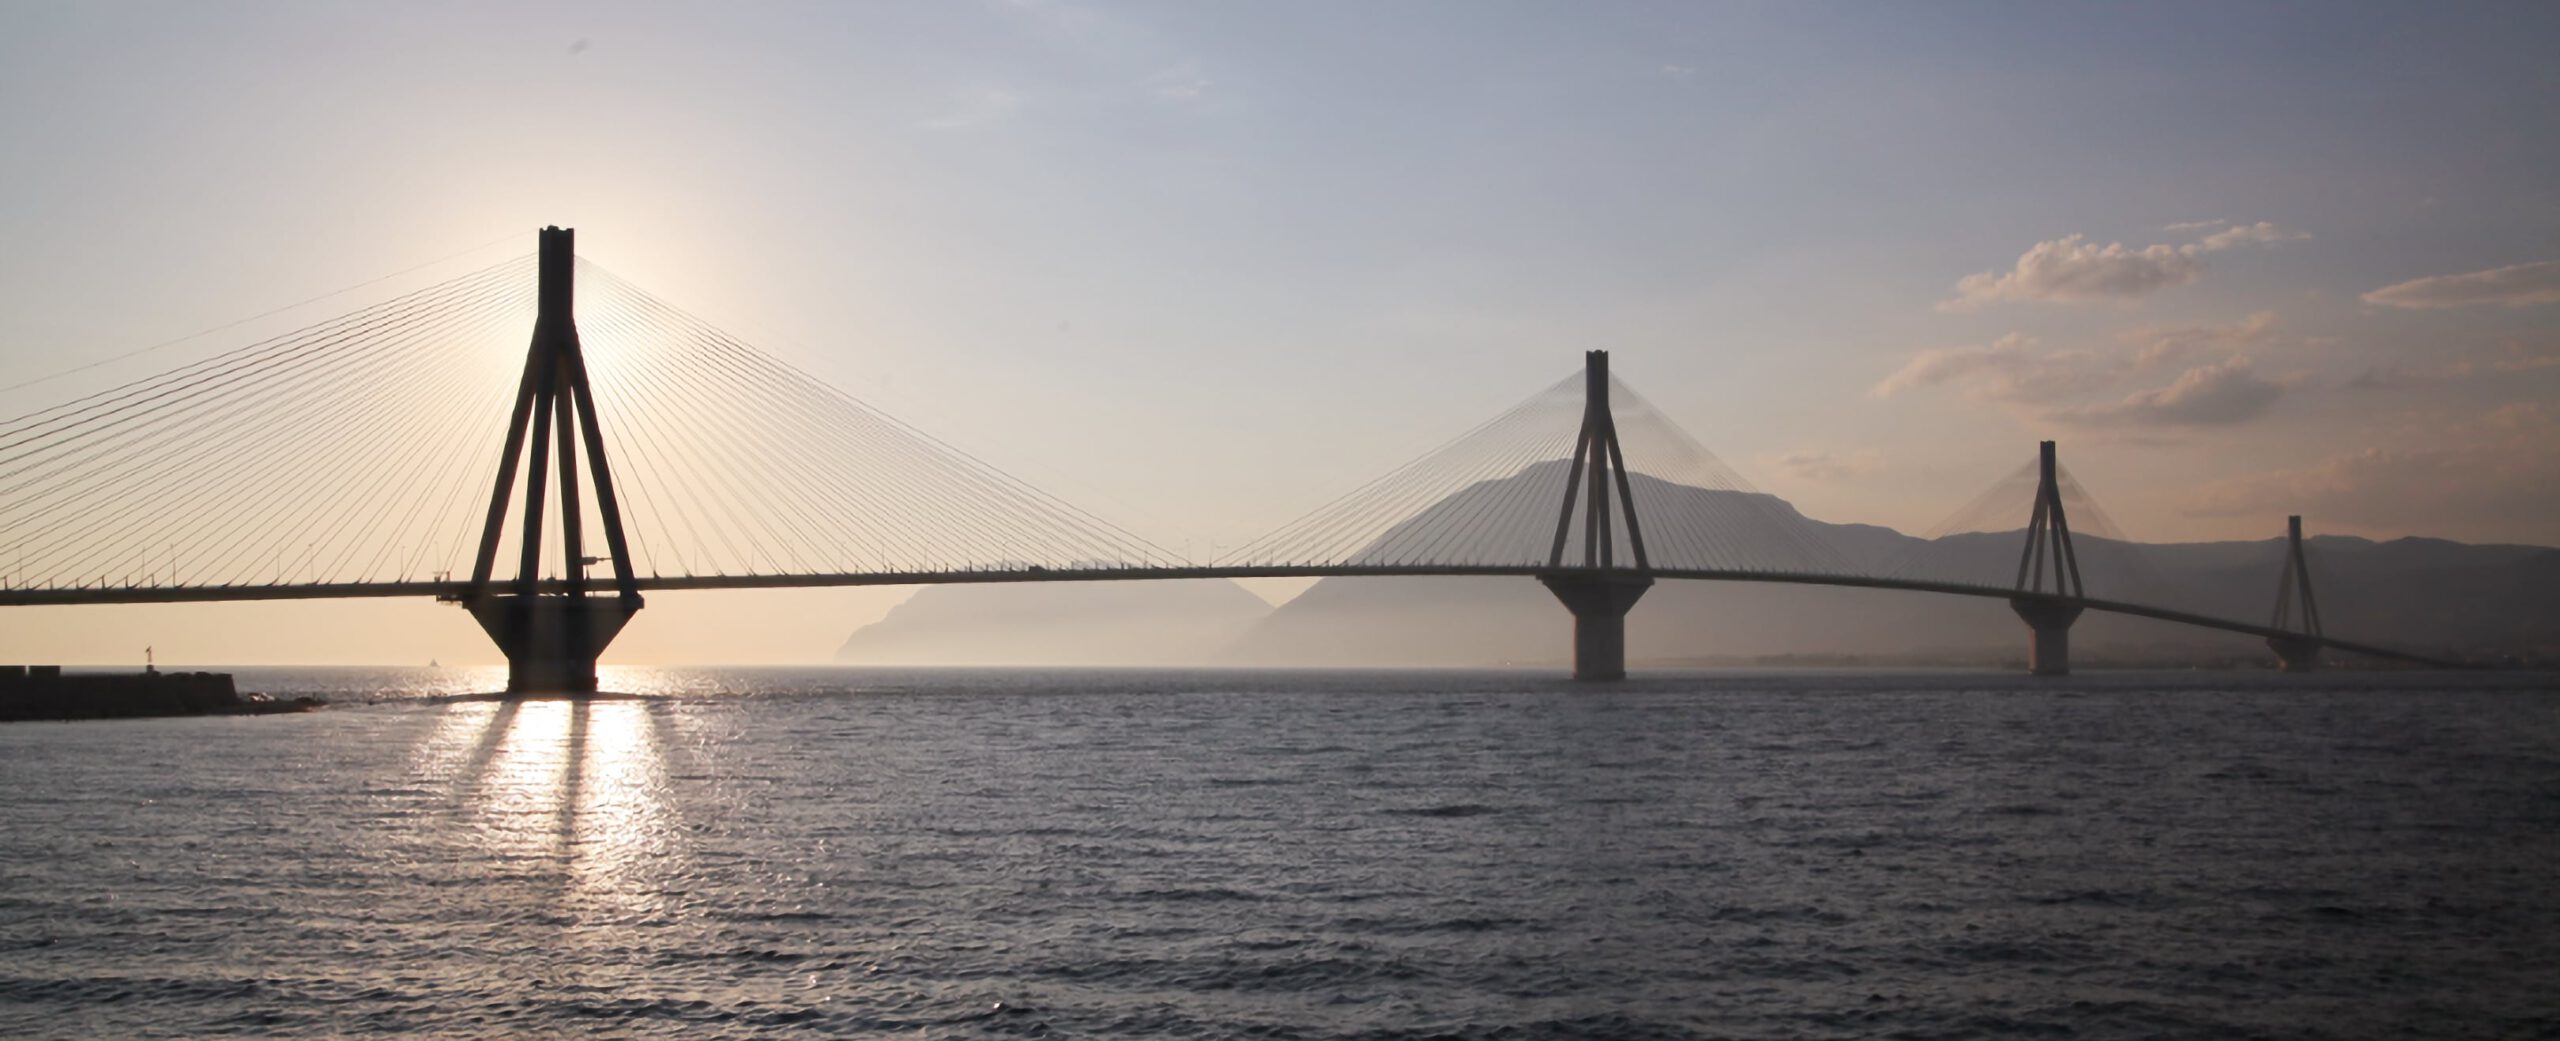 Rio-Antirrio-Brücke bei Sonnenuntergang